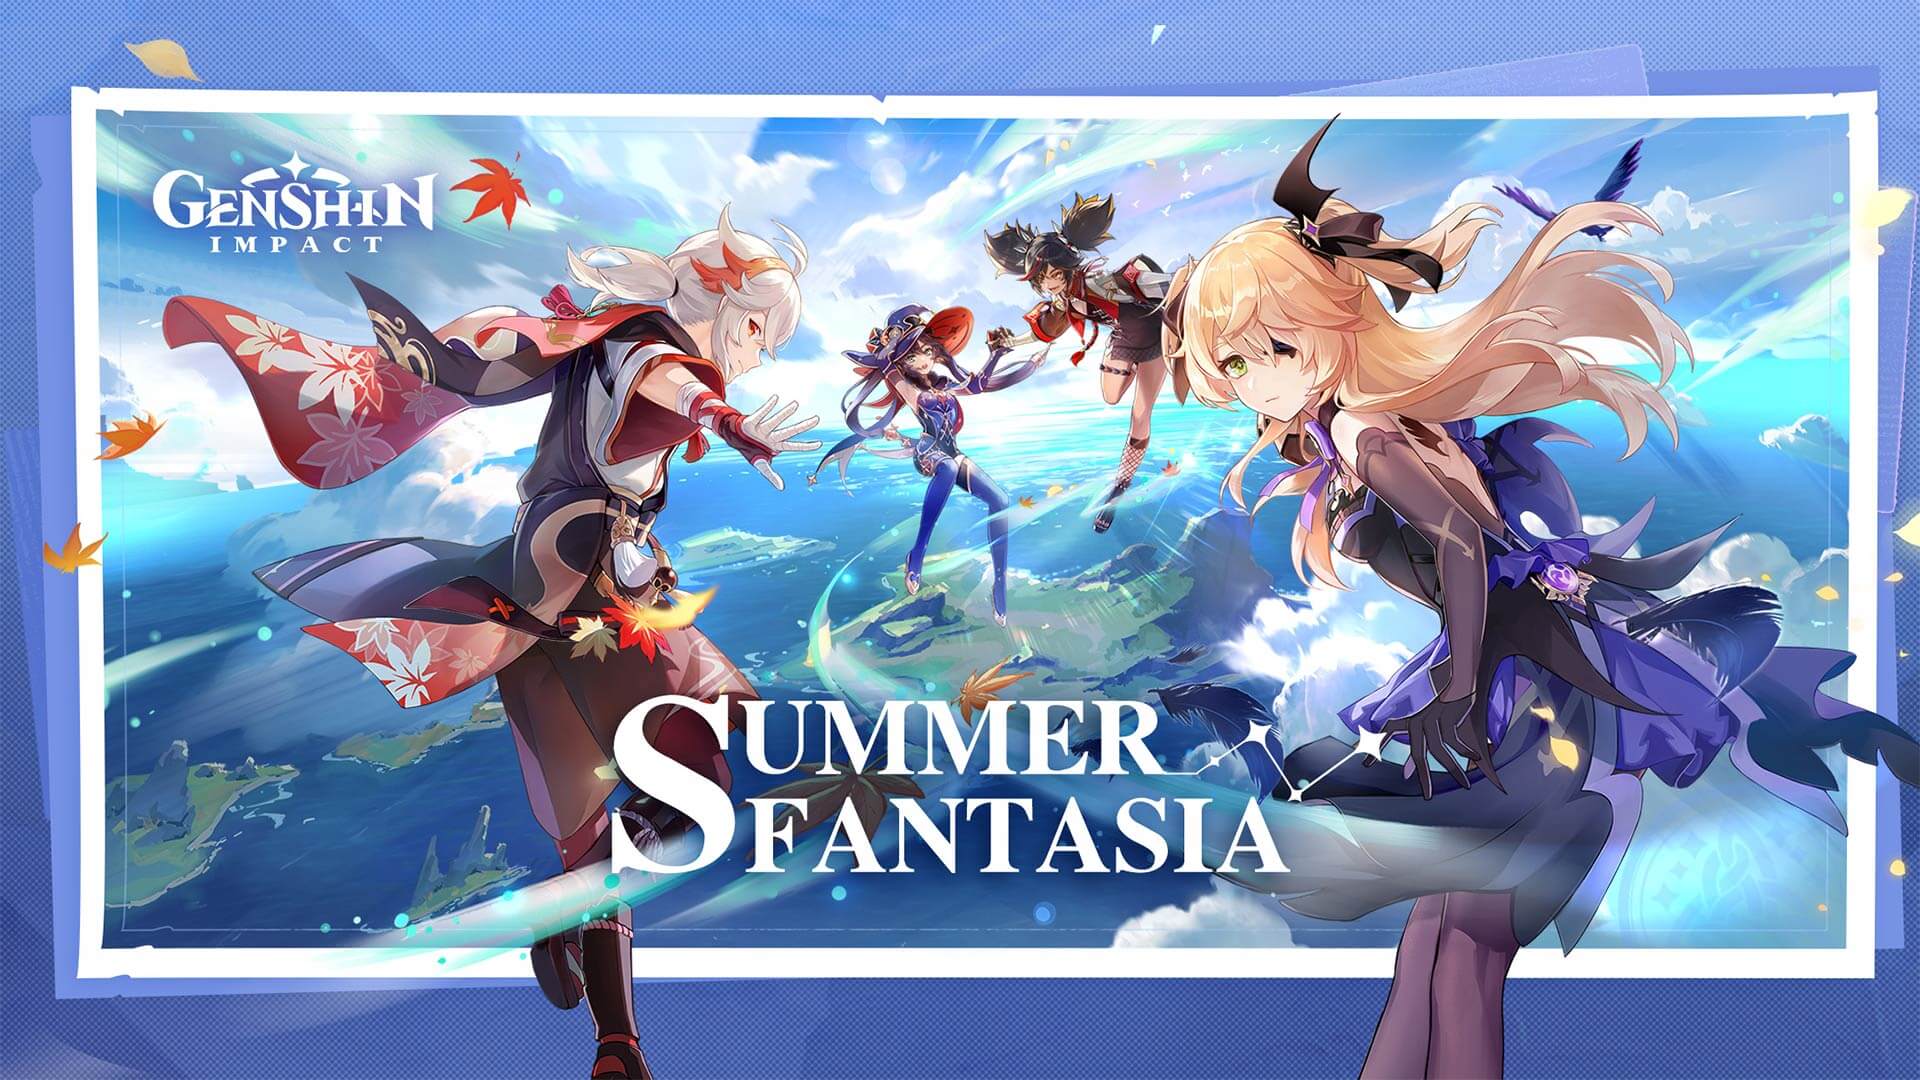 Genshin Impact - Summer Fantasia